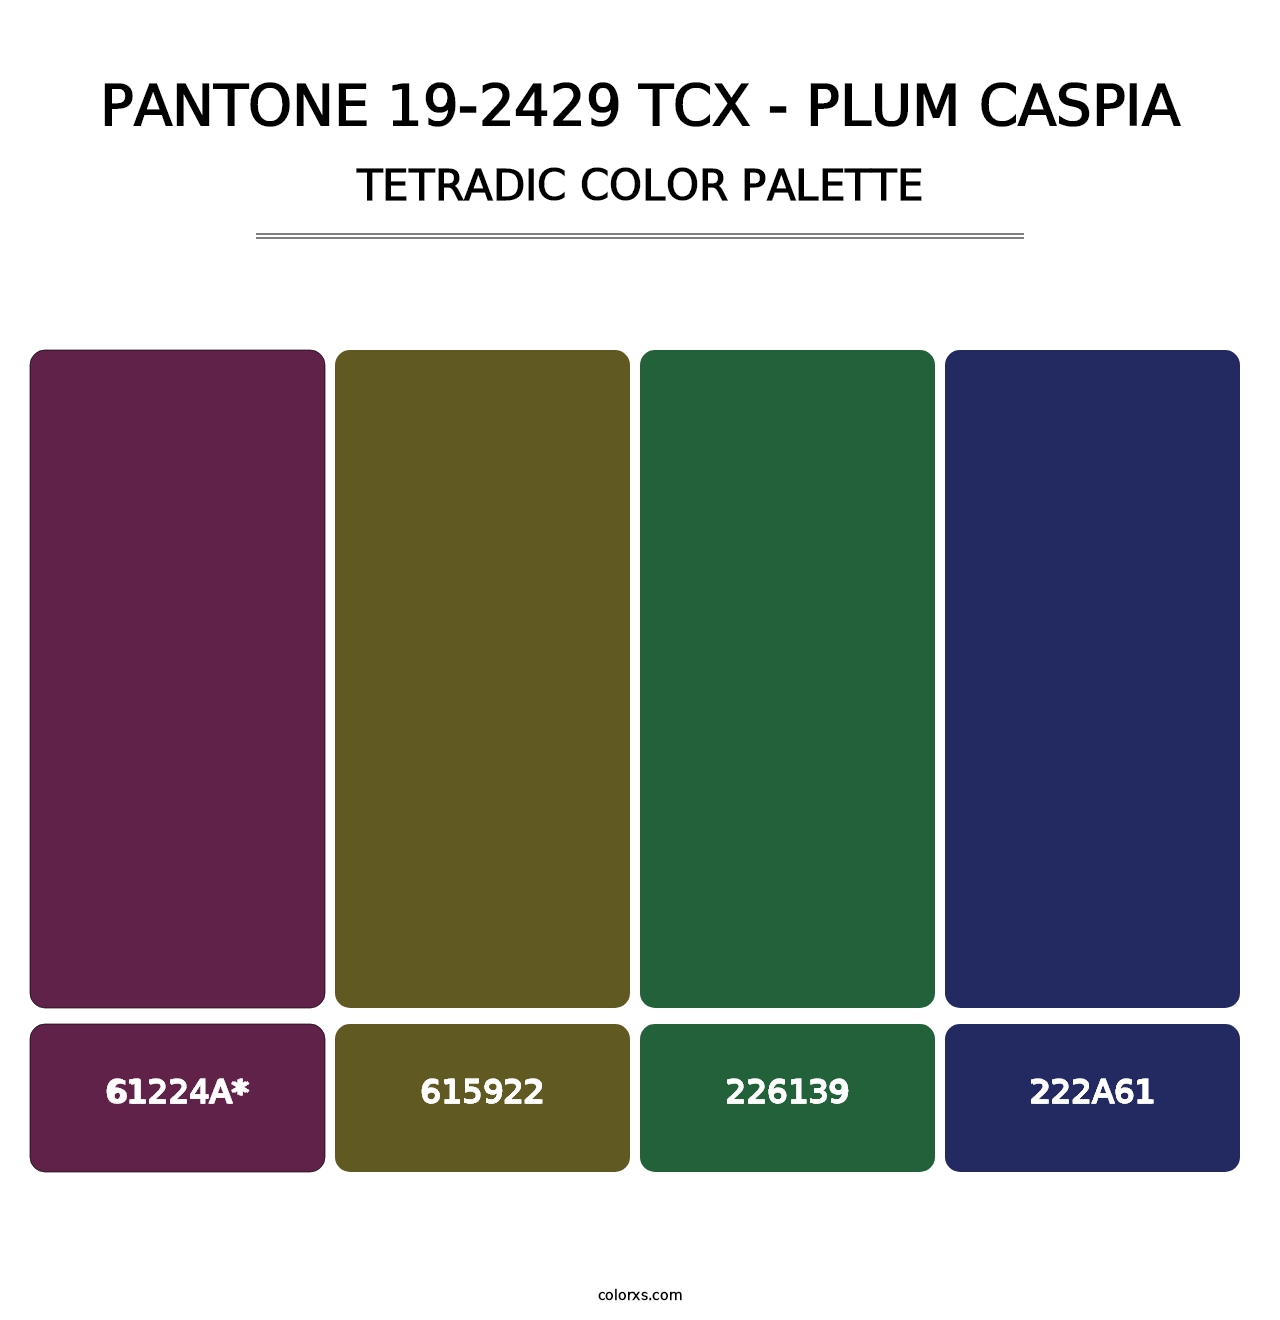 PANTONE 19-2429 TCX - Plum Caspia - Tetradic Color Palette